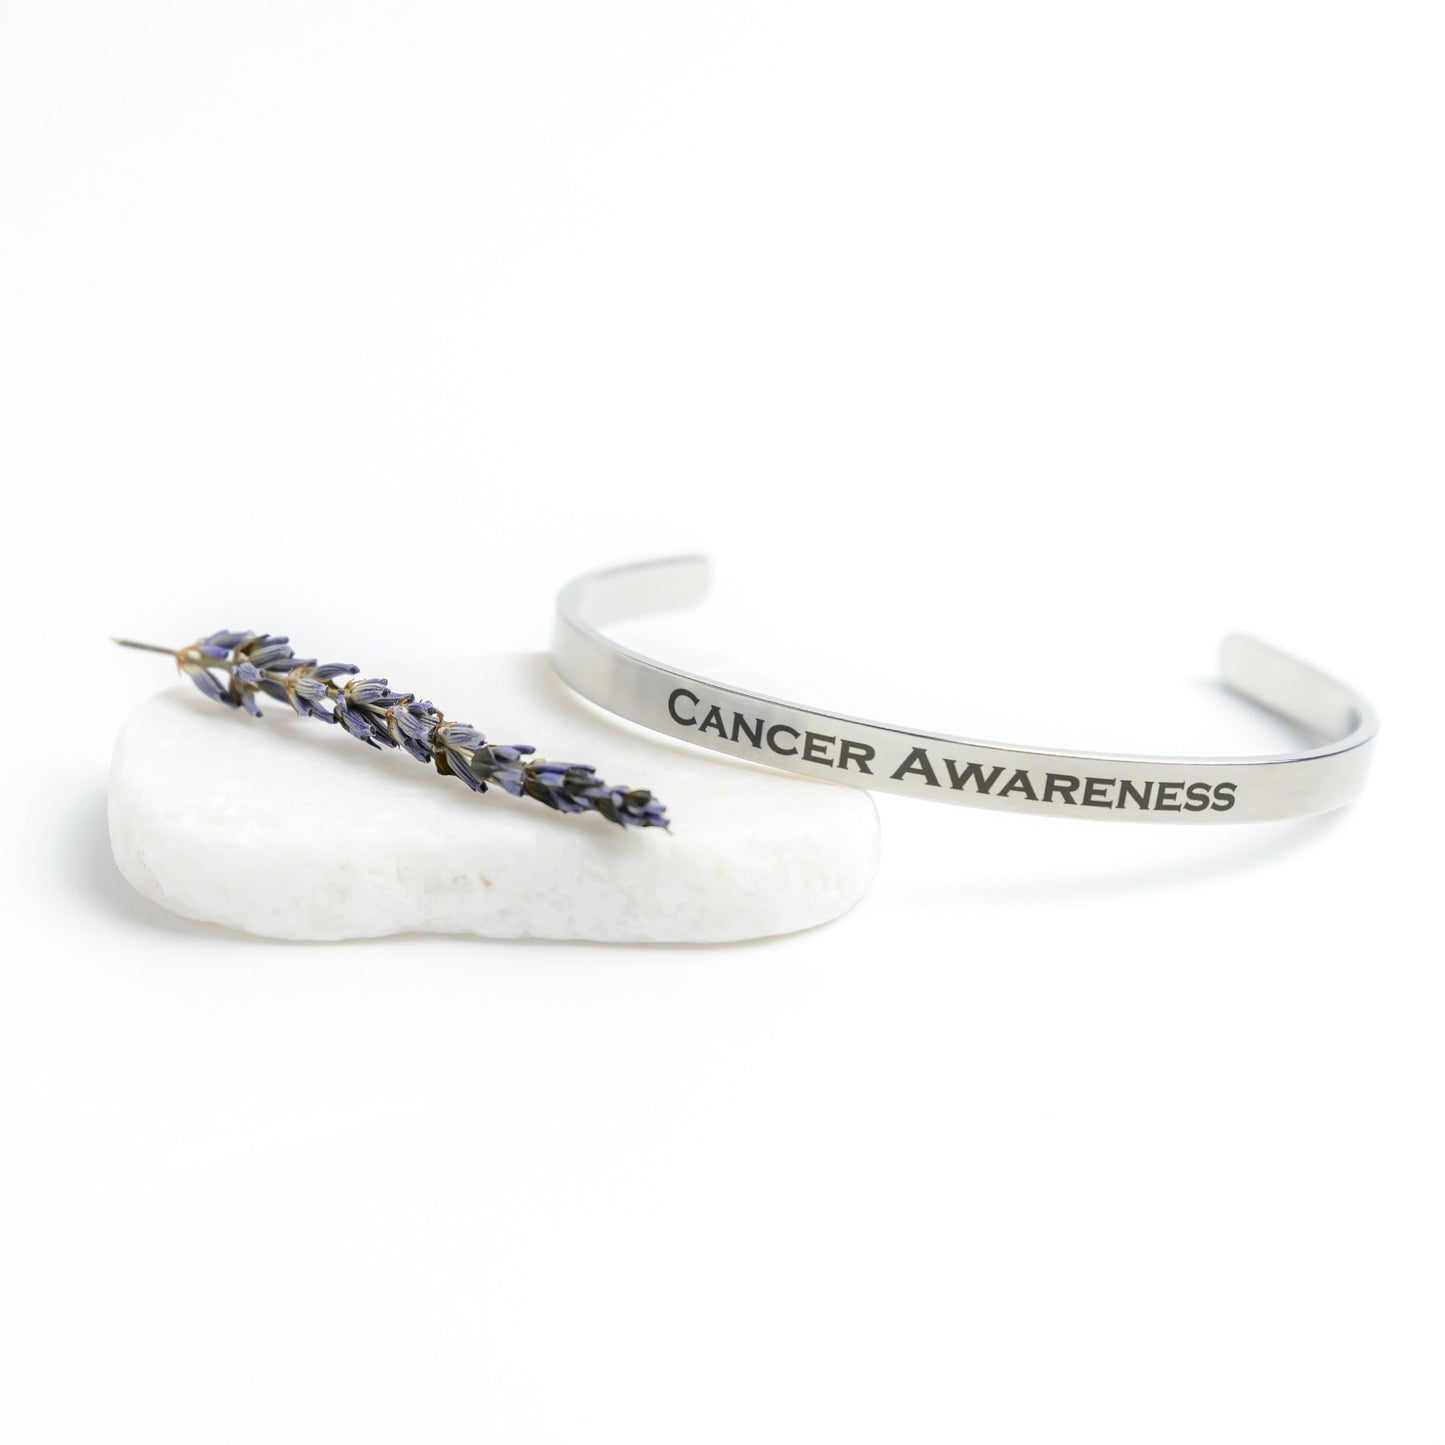 Personalized Cancer Awareness Cuff Bracelet |x|